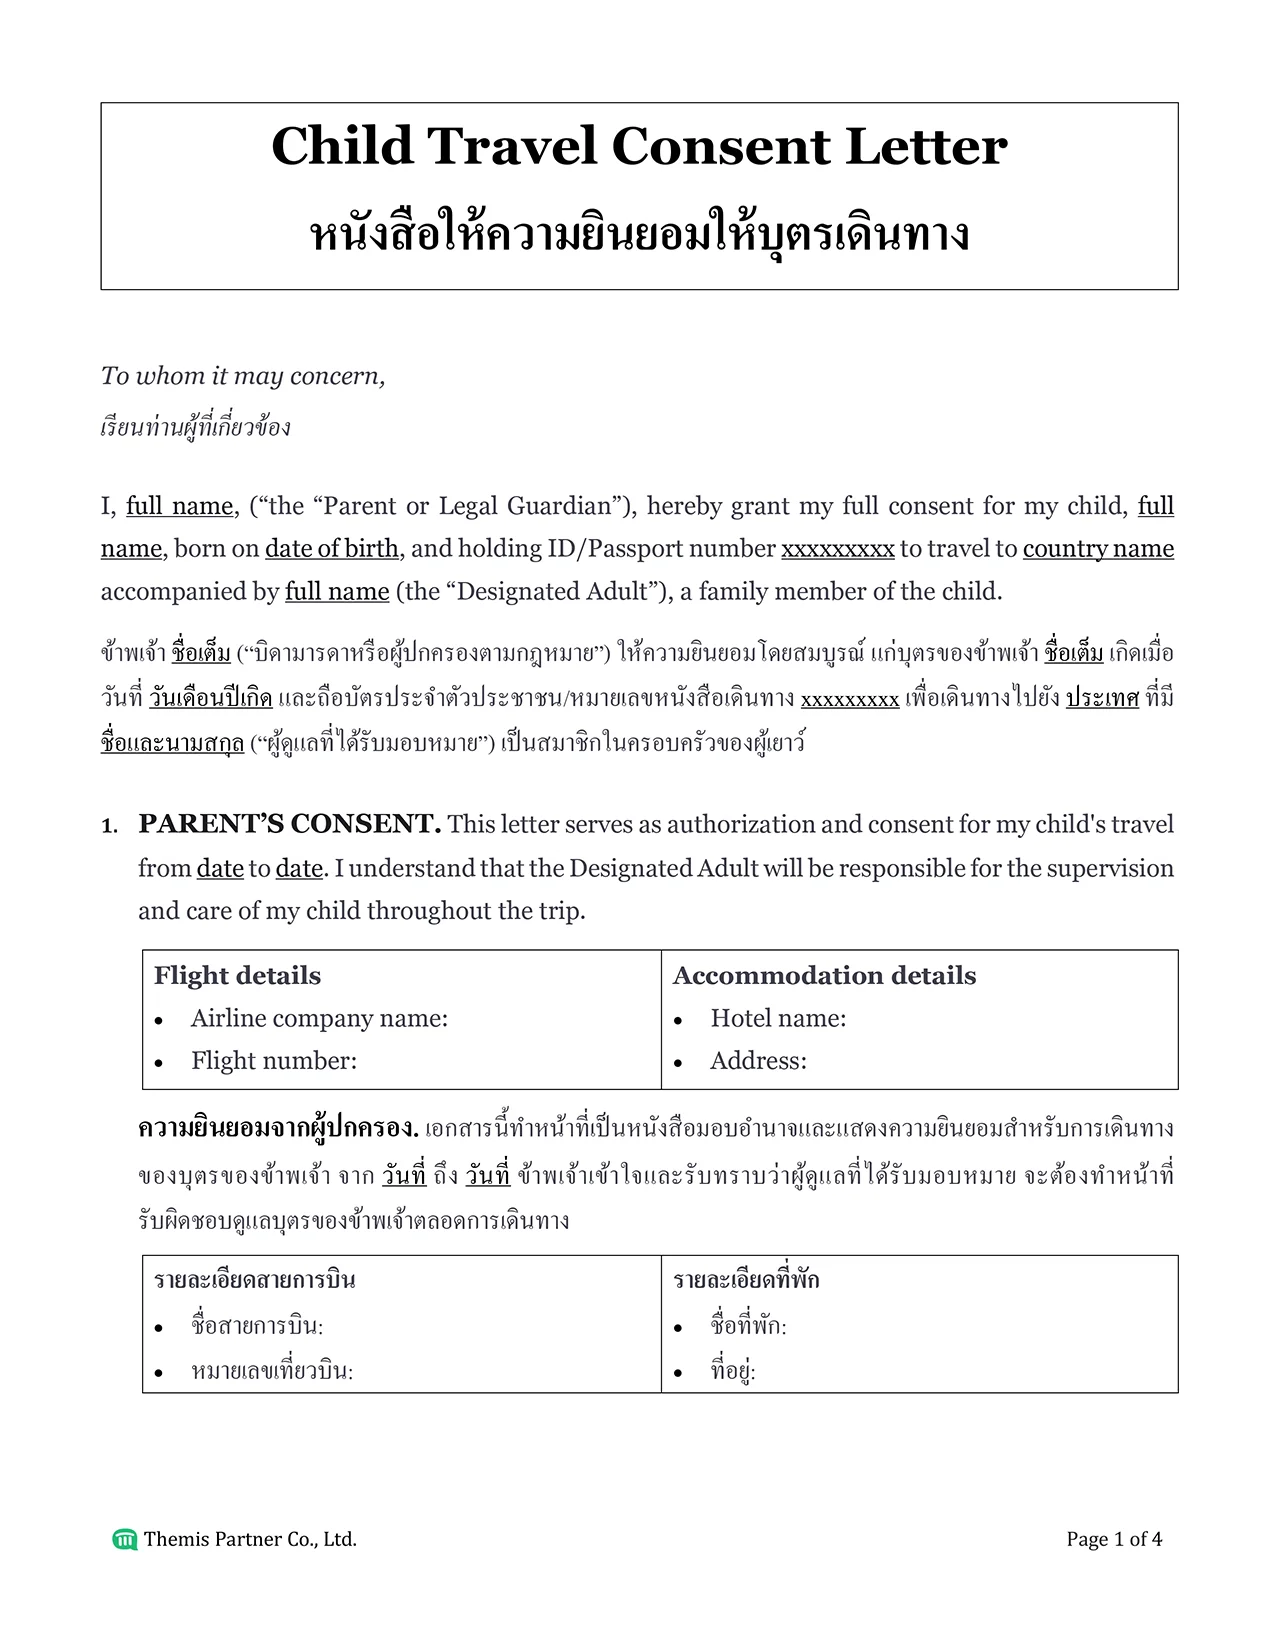 Child travel consent letter Thailand 1